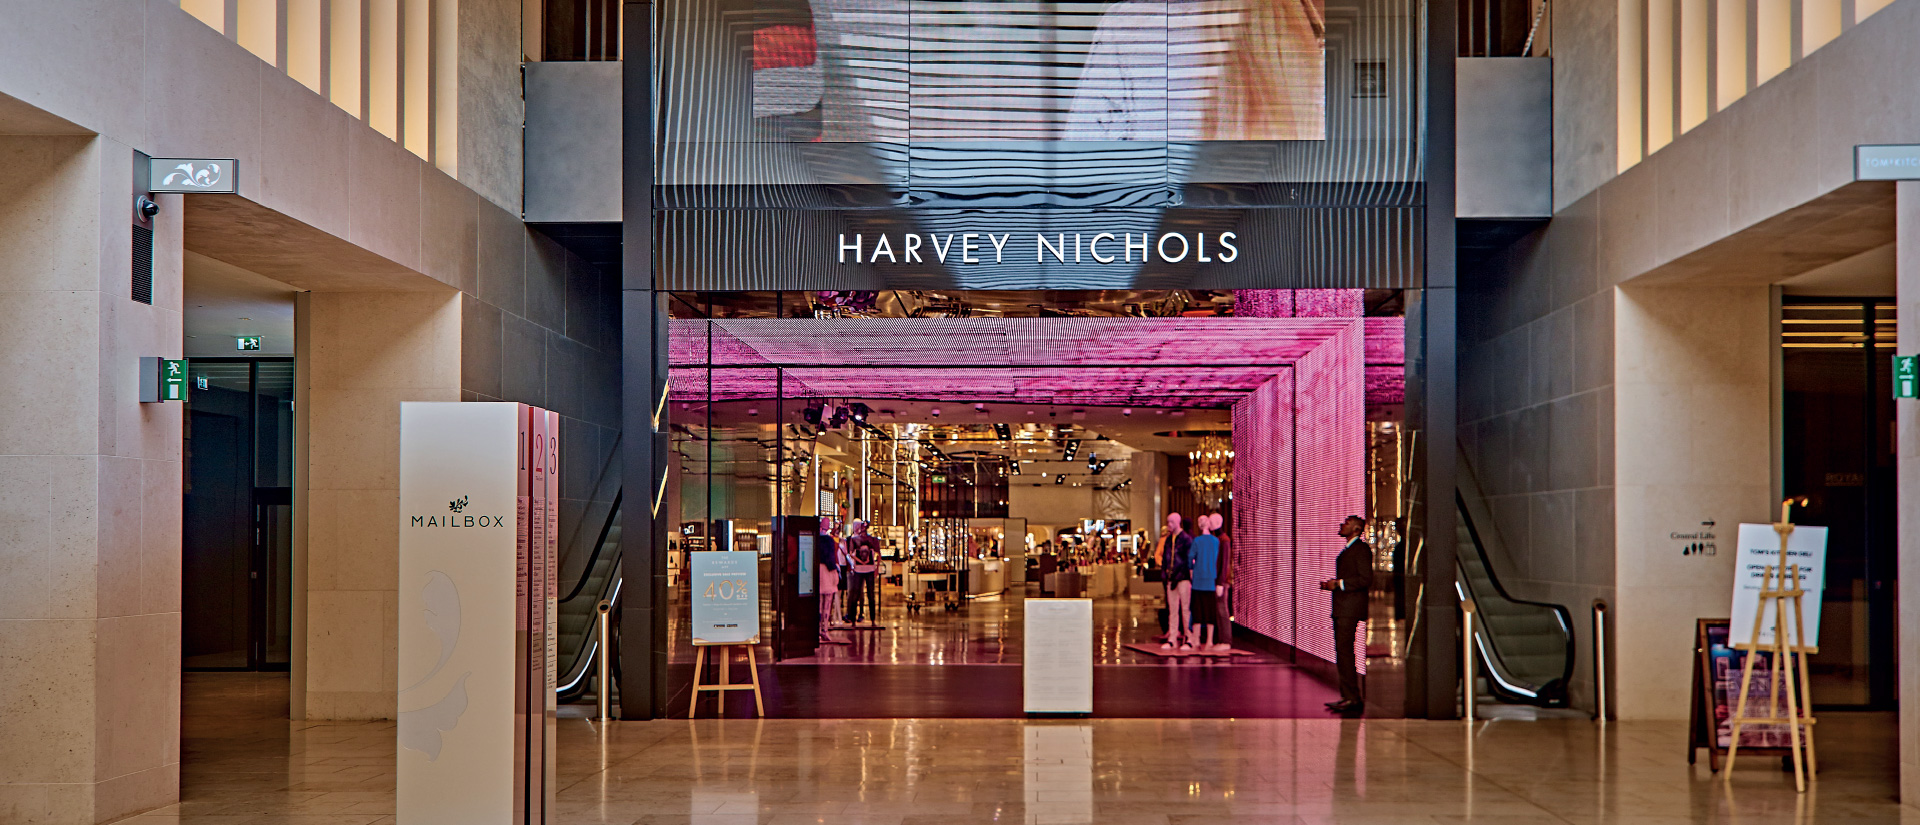 Harvey Nichols in Birmingham City Centre